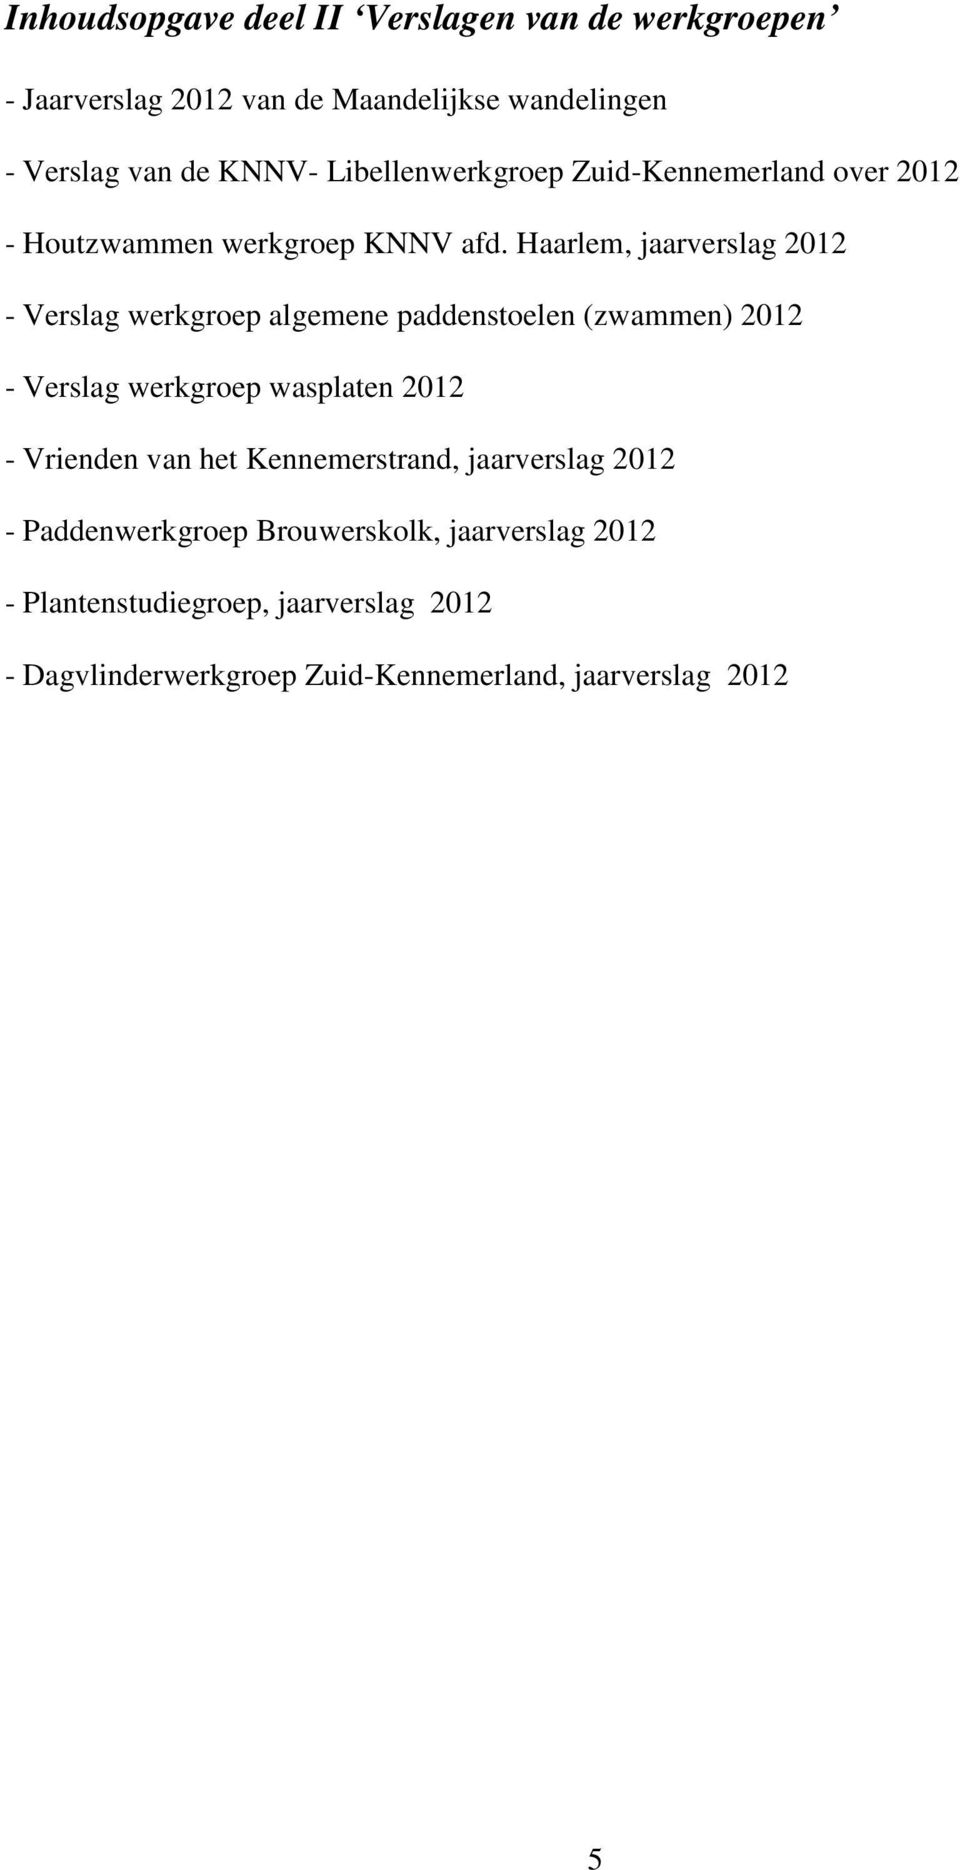 Haarlem, jaarverslag 2012 - Verslag werkgroep algemene paddenstoelen (zwammen) 2012 - Verslag werkgroep wasplaten 2012 - Vrienden